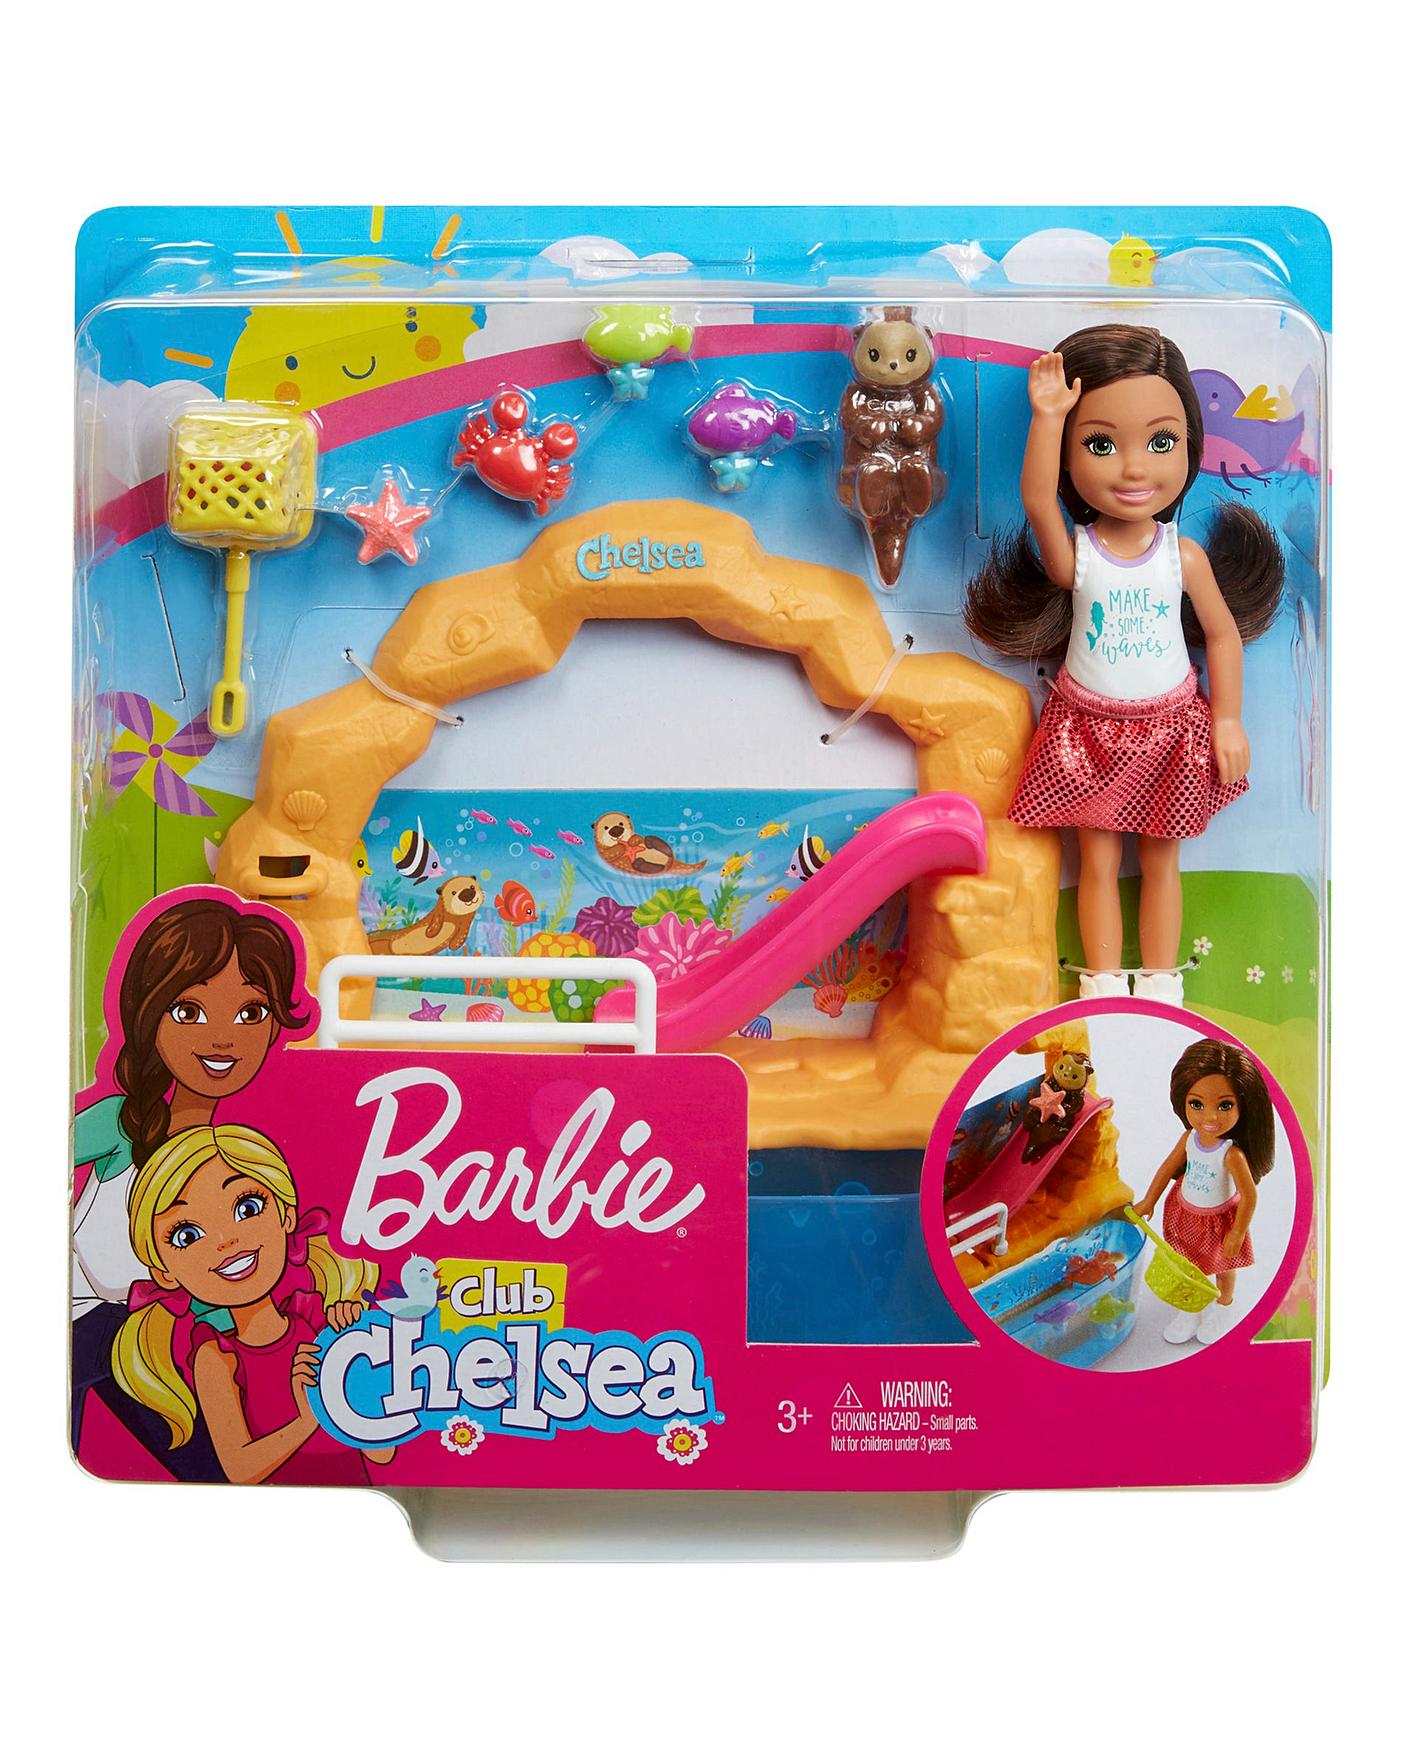 barbie chelsea sets